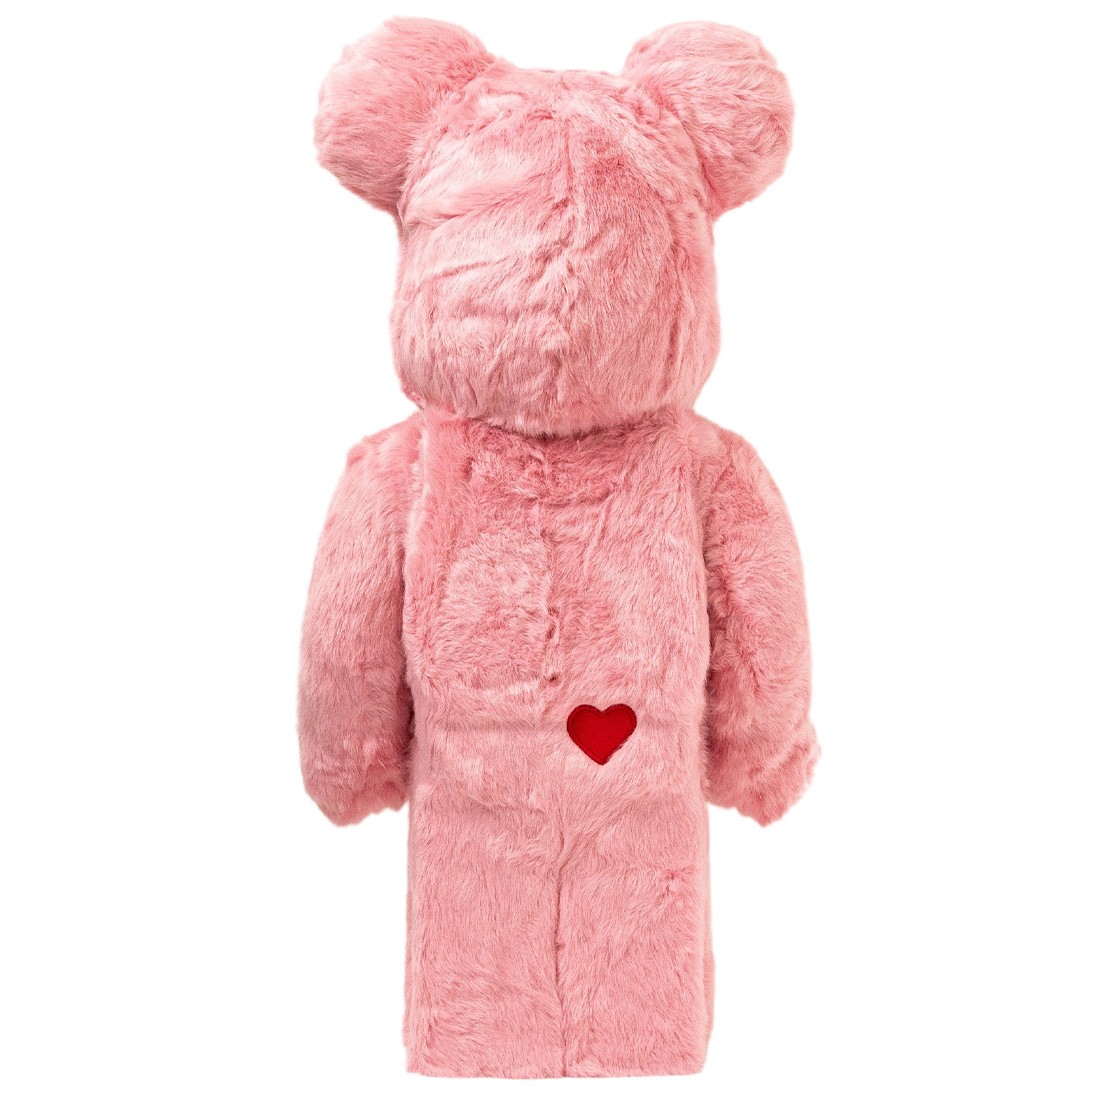 Medicom Care Bears Cheer Bear Costume Ver. 1000% Bearbrick Figure pink